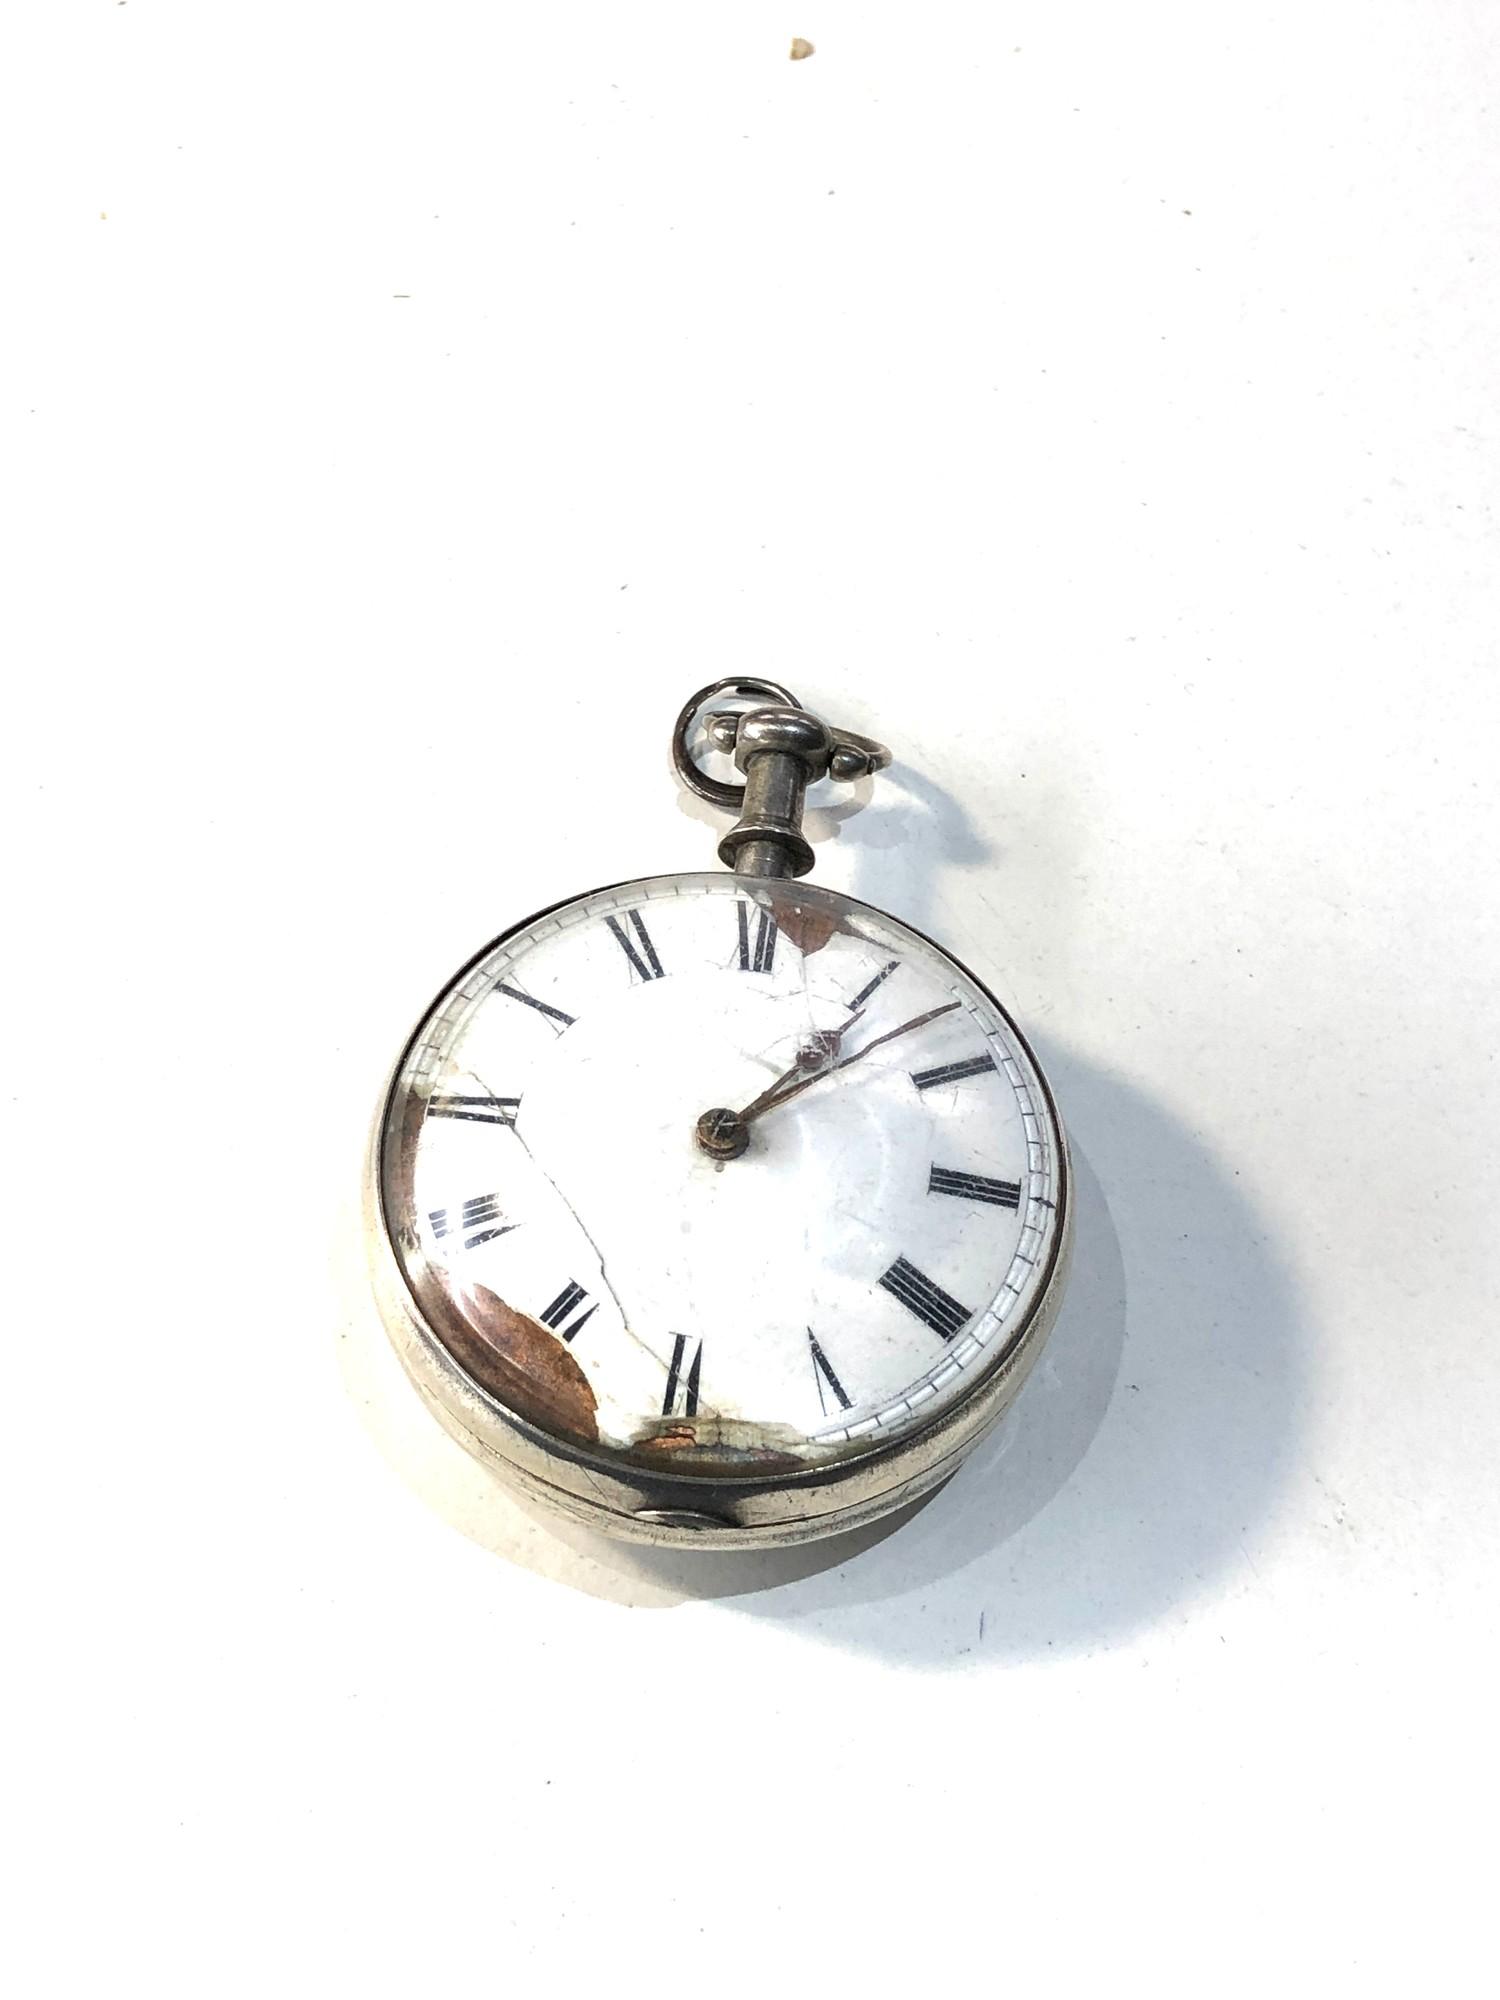 Antique silver cased verge fusee pocket watch parts spares or repair